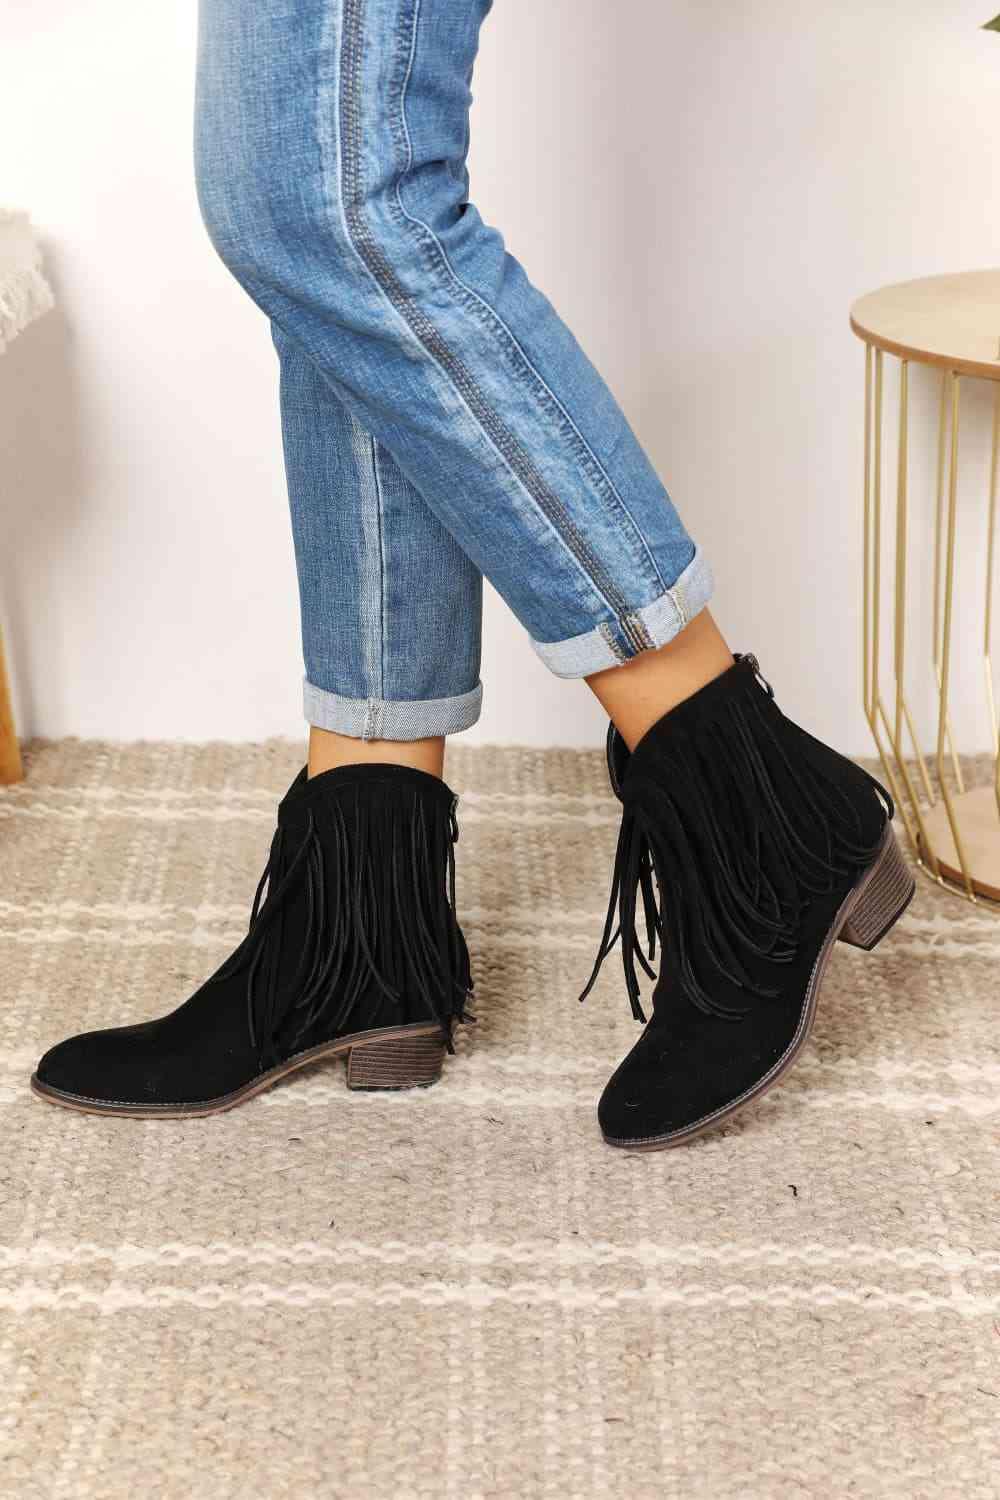 Legend Women's Fringe Cowboy Western Ankle Boots - Lab Fashion, Home & Health